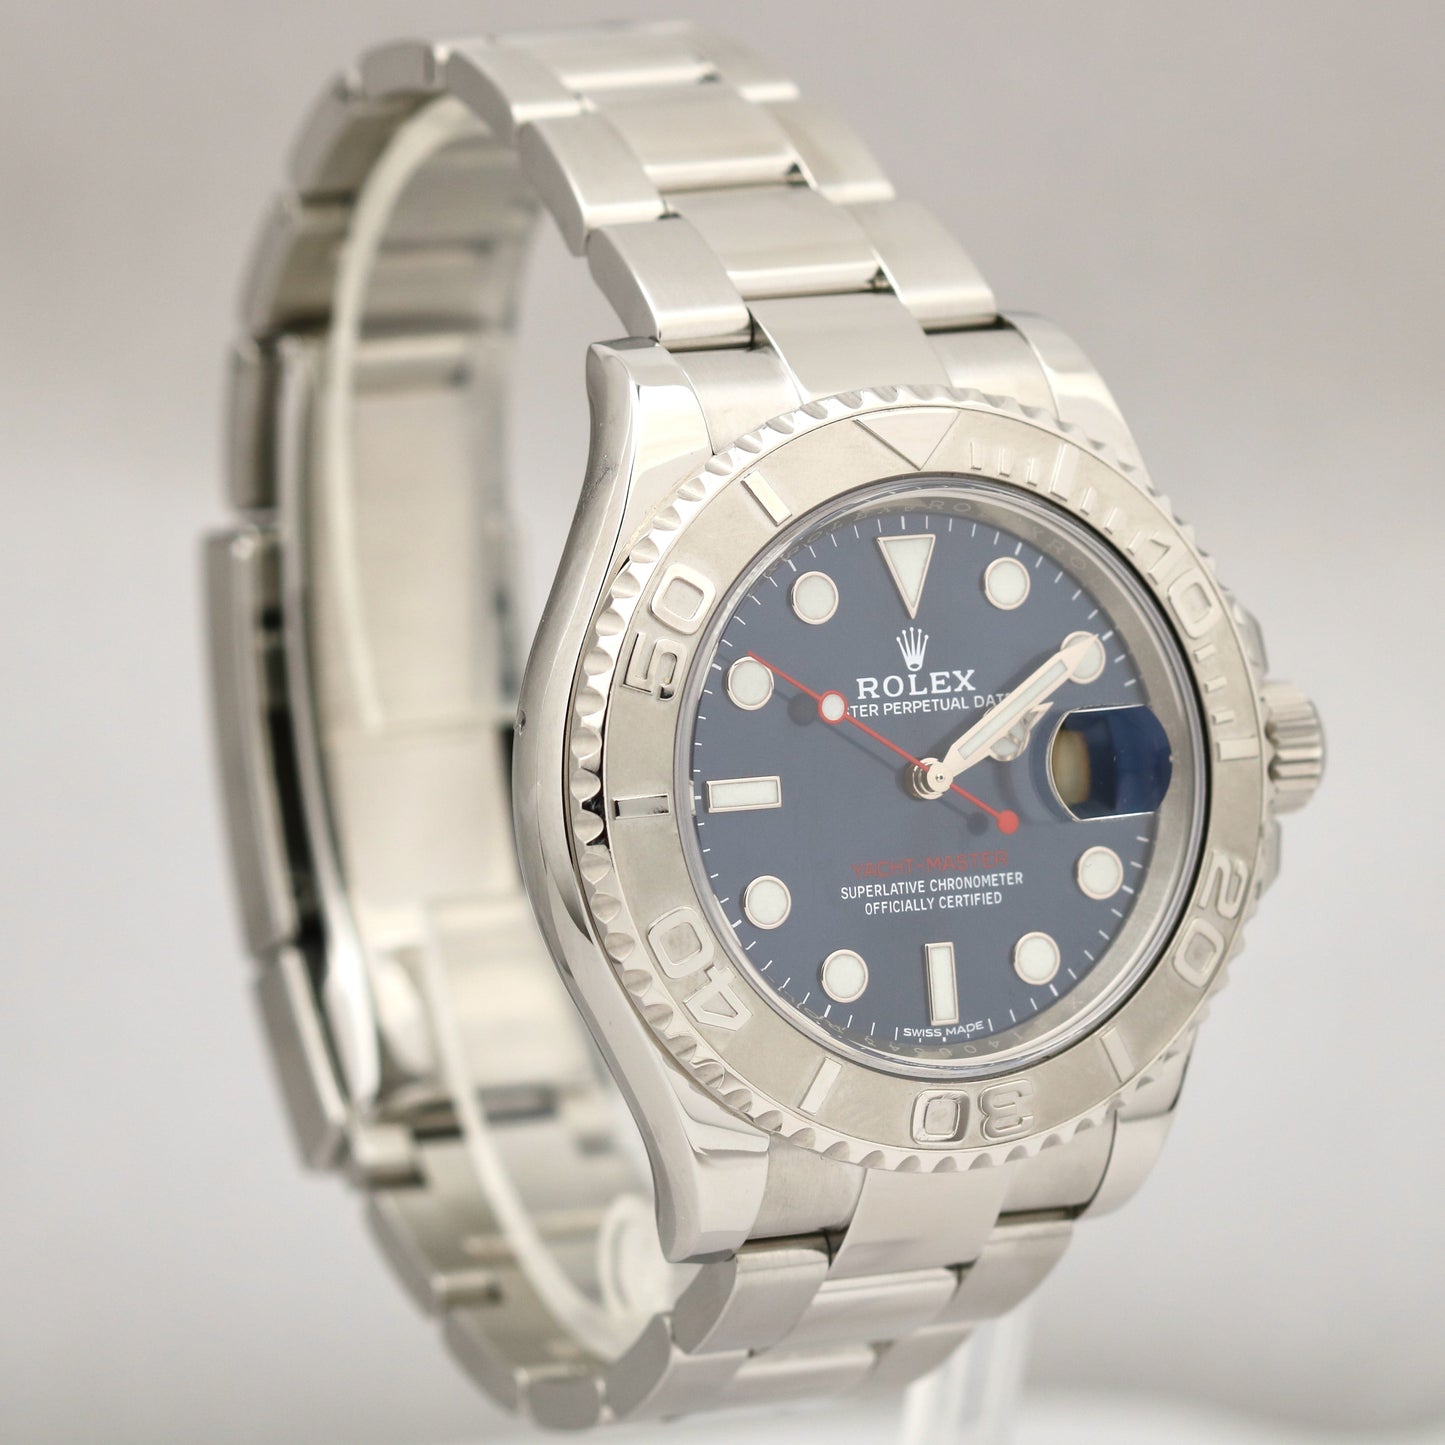 MINT Rolex Yacht-Master Stainless Steel Platinum Blue 40mm Date Watch 116622